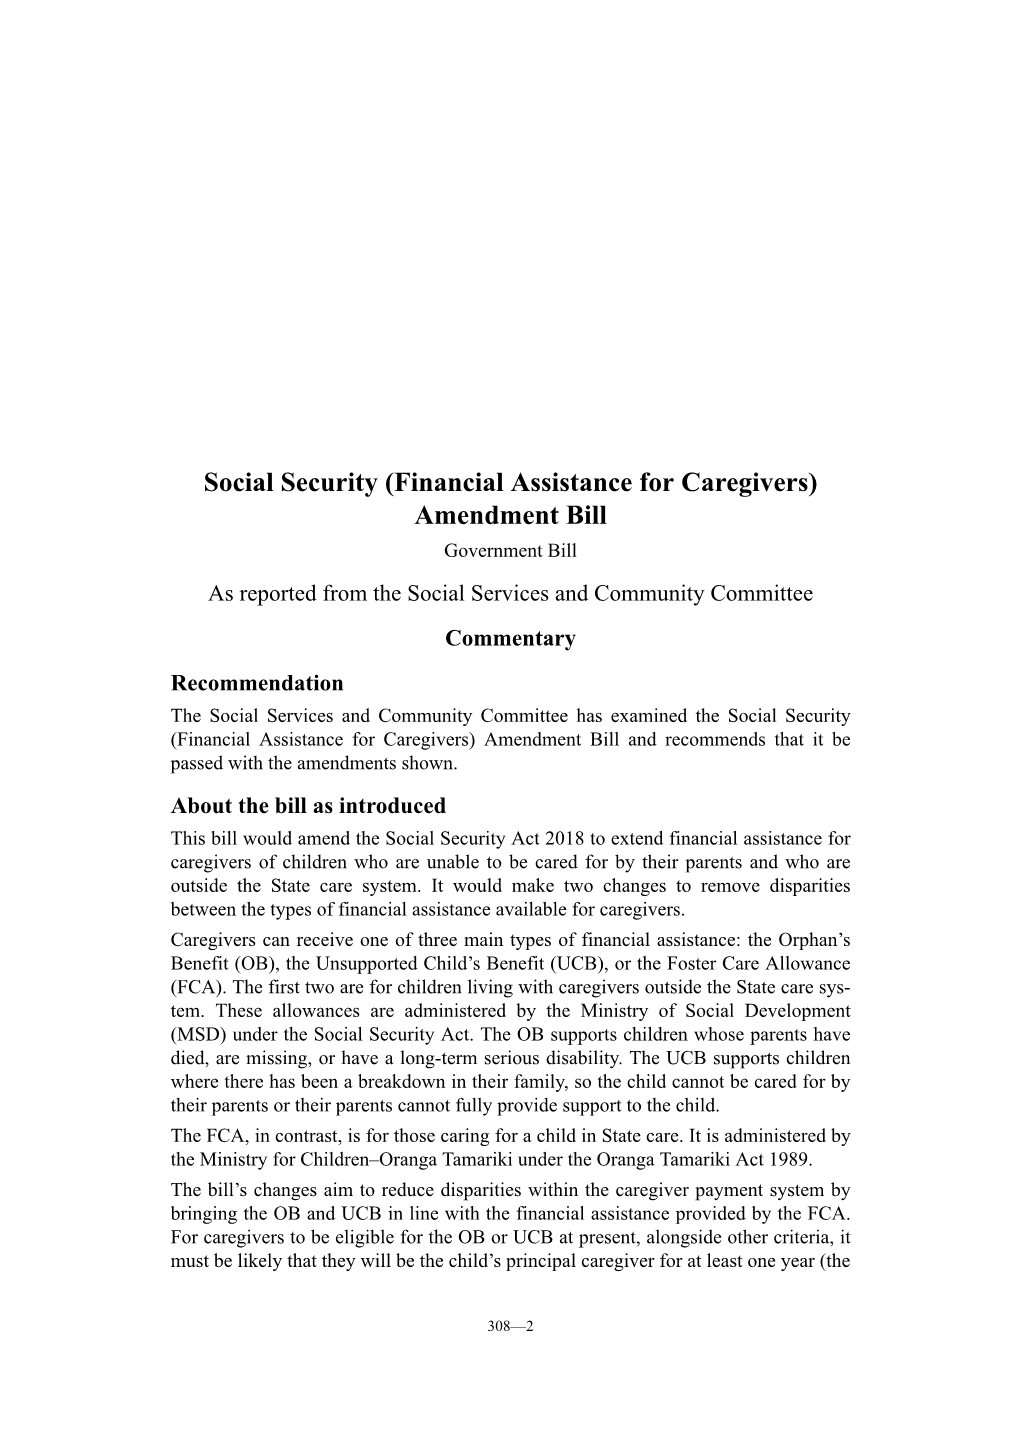 Social Security (Financial Assistance for Caregivers) Amendment Bill